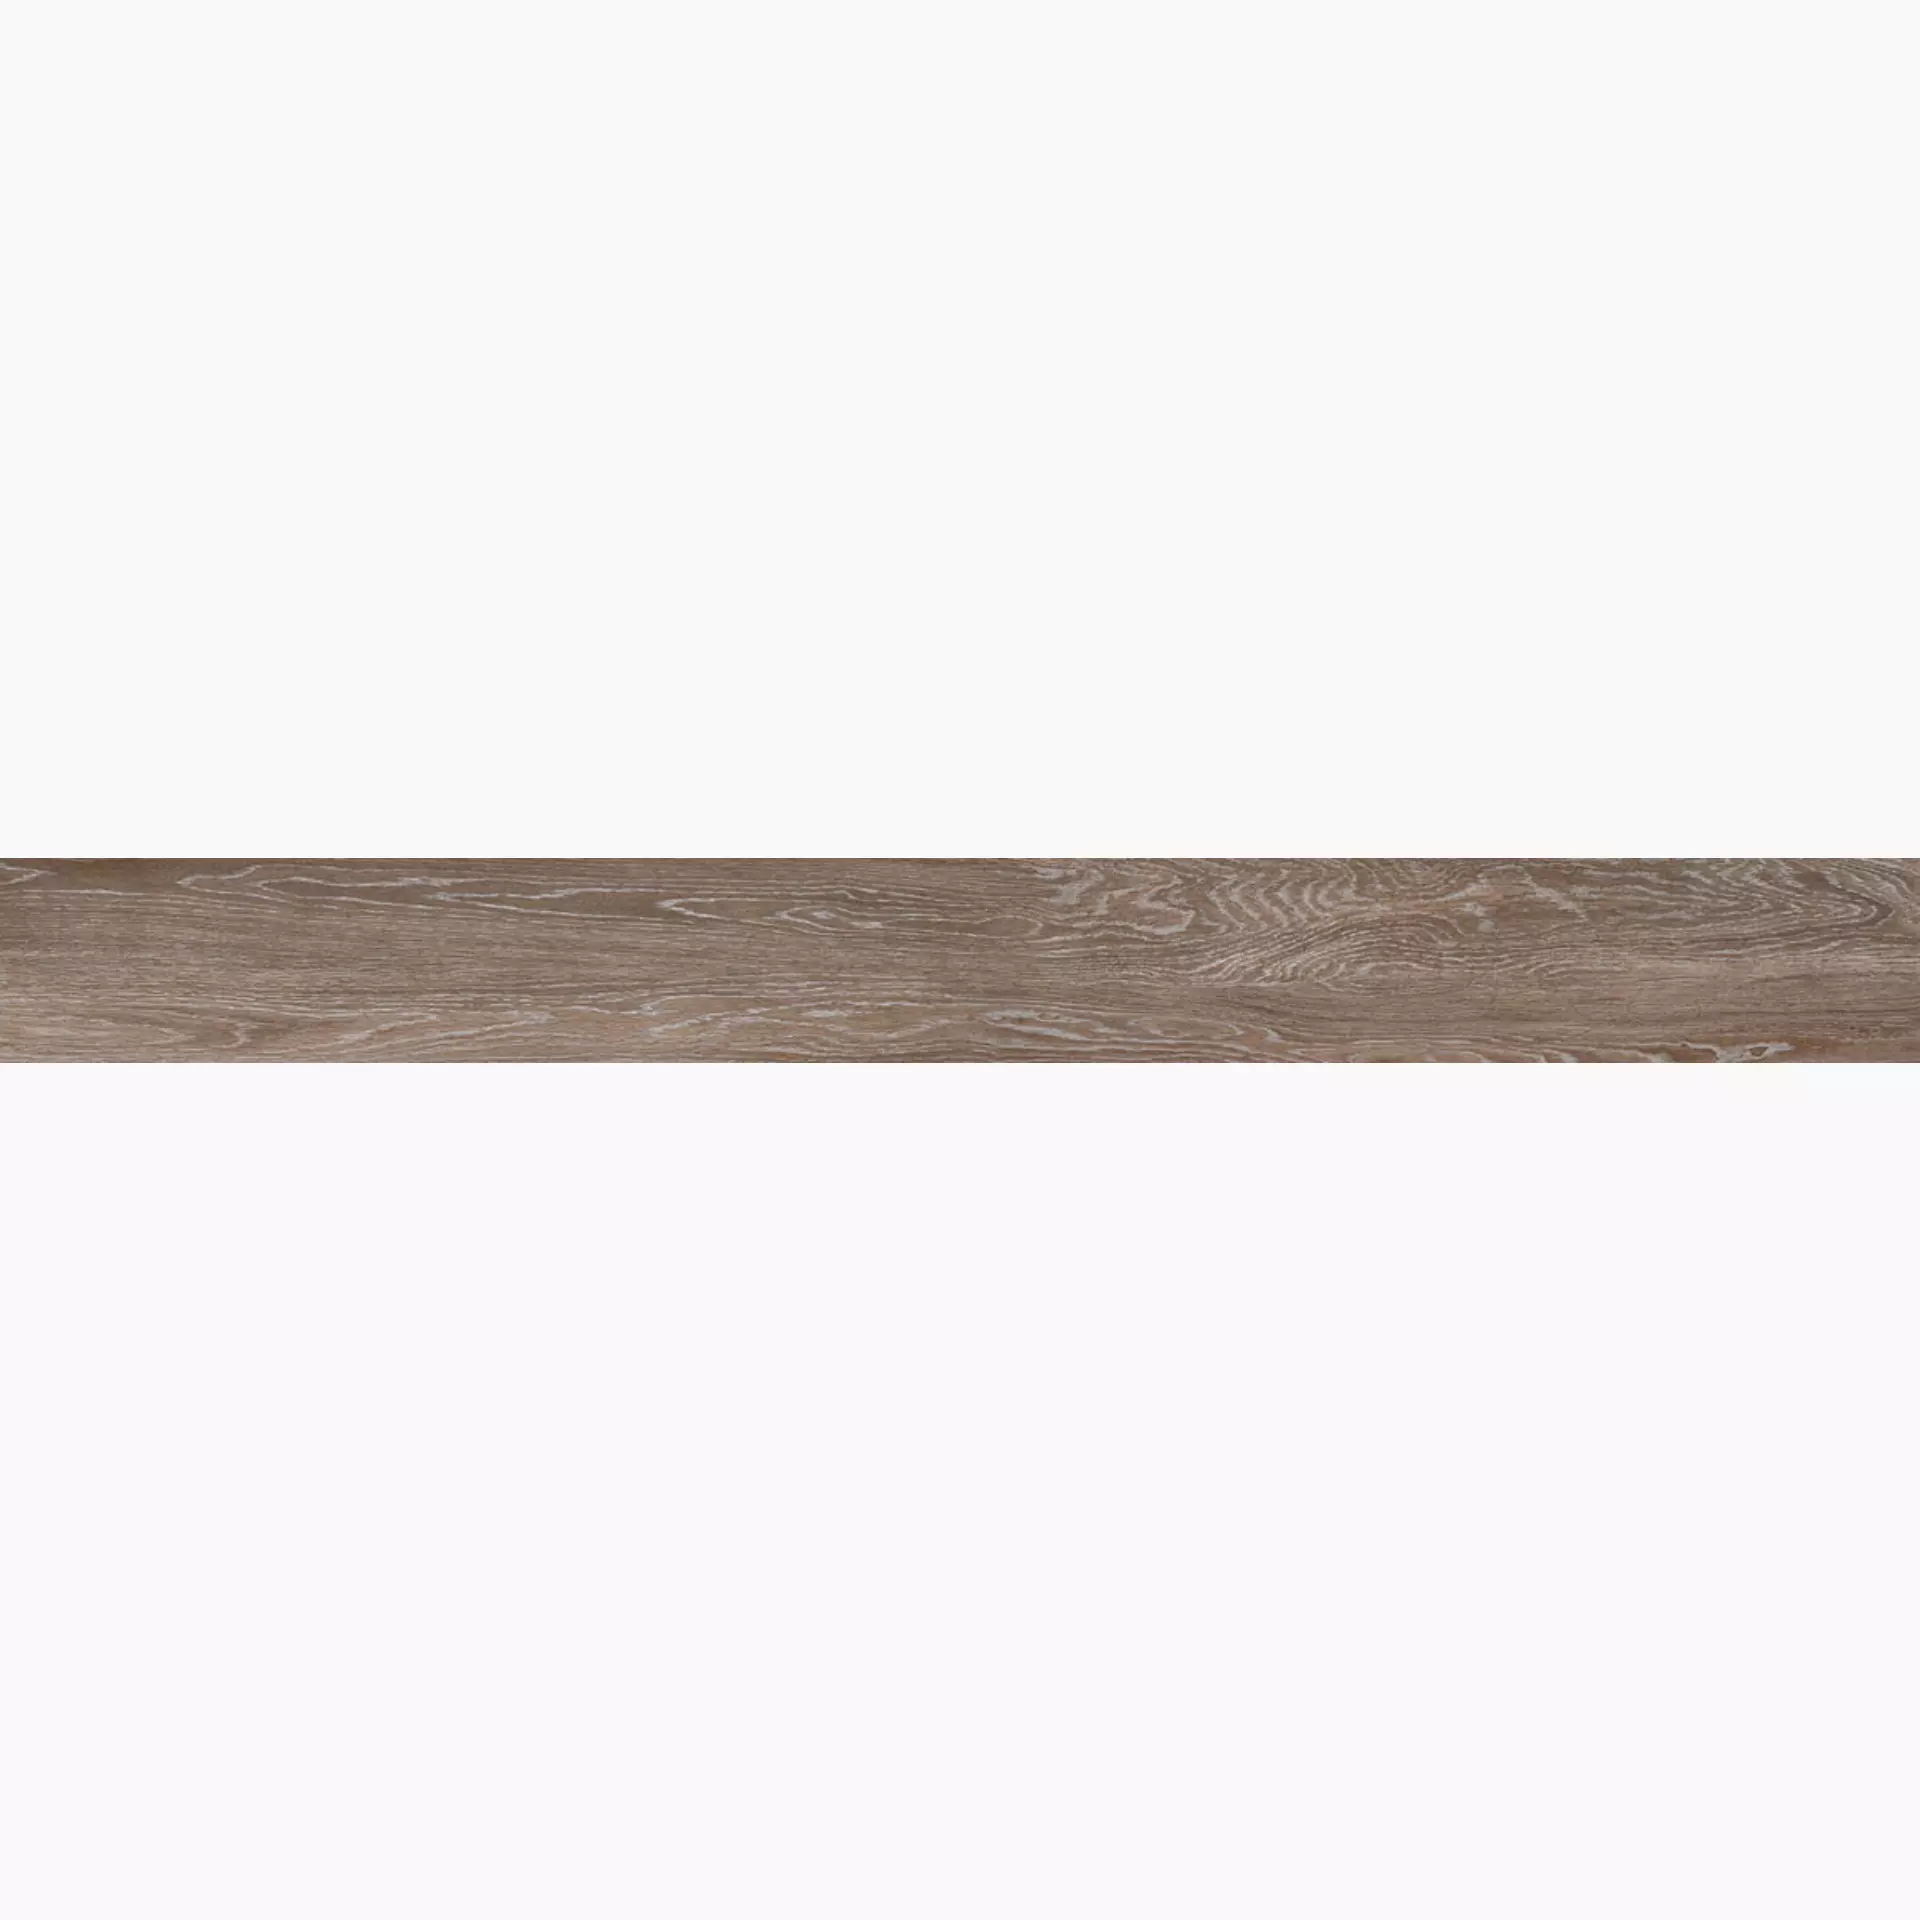 La Faenza Legno Brown Natural Slate Cut Matt 170463 20x180cm rectified 10mm - LEGNO 2018T RM